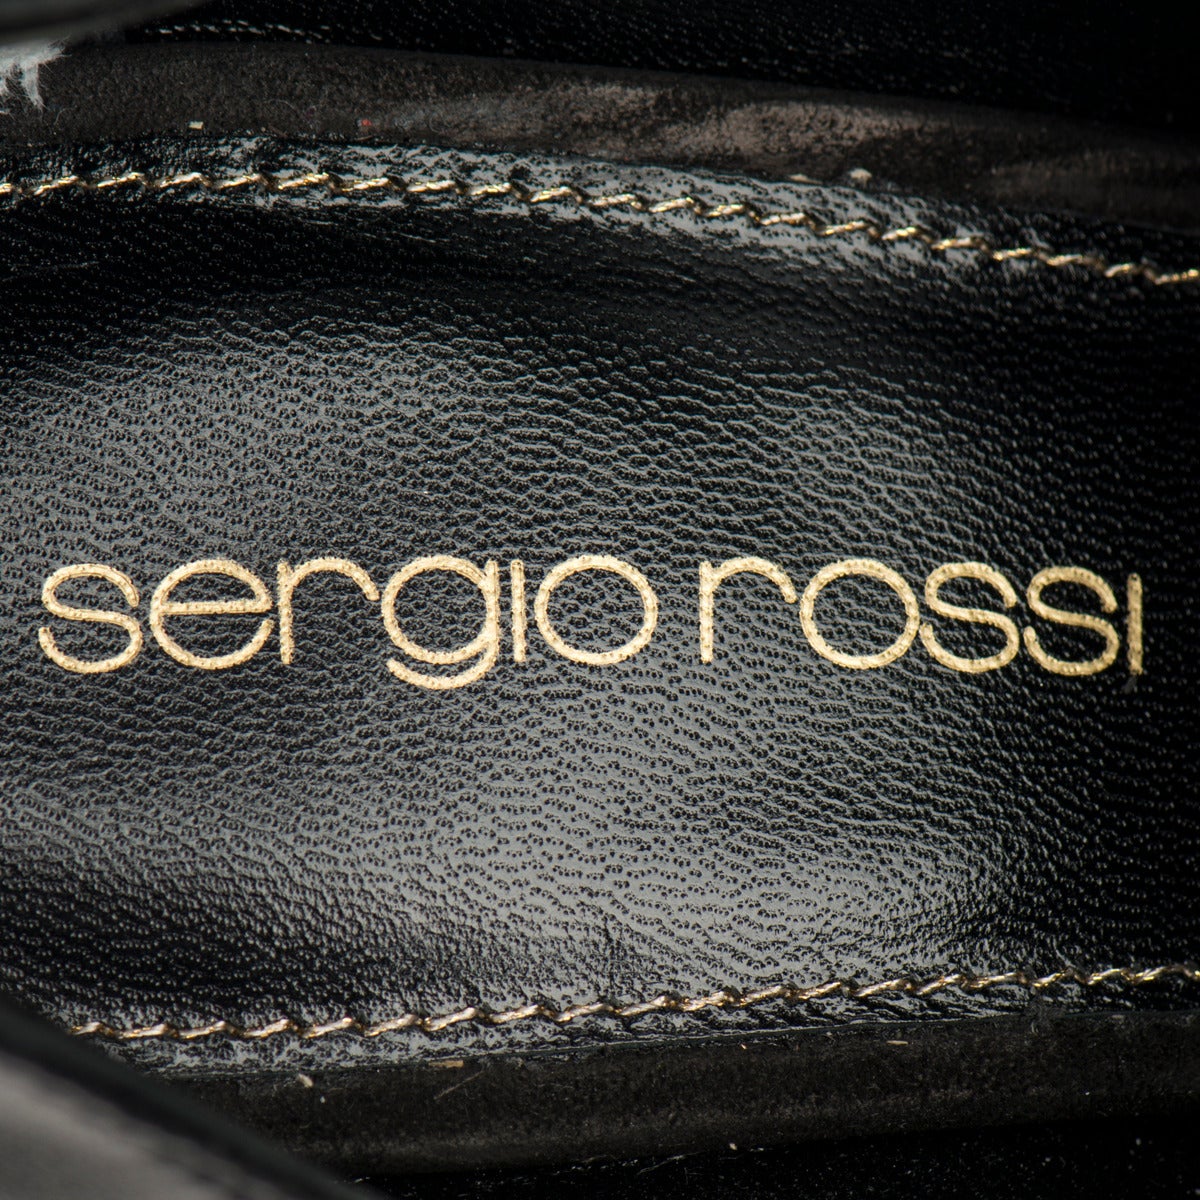 Sergio Rossi Black Leather Décolleté Open Toe 2